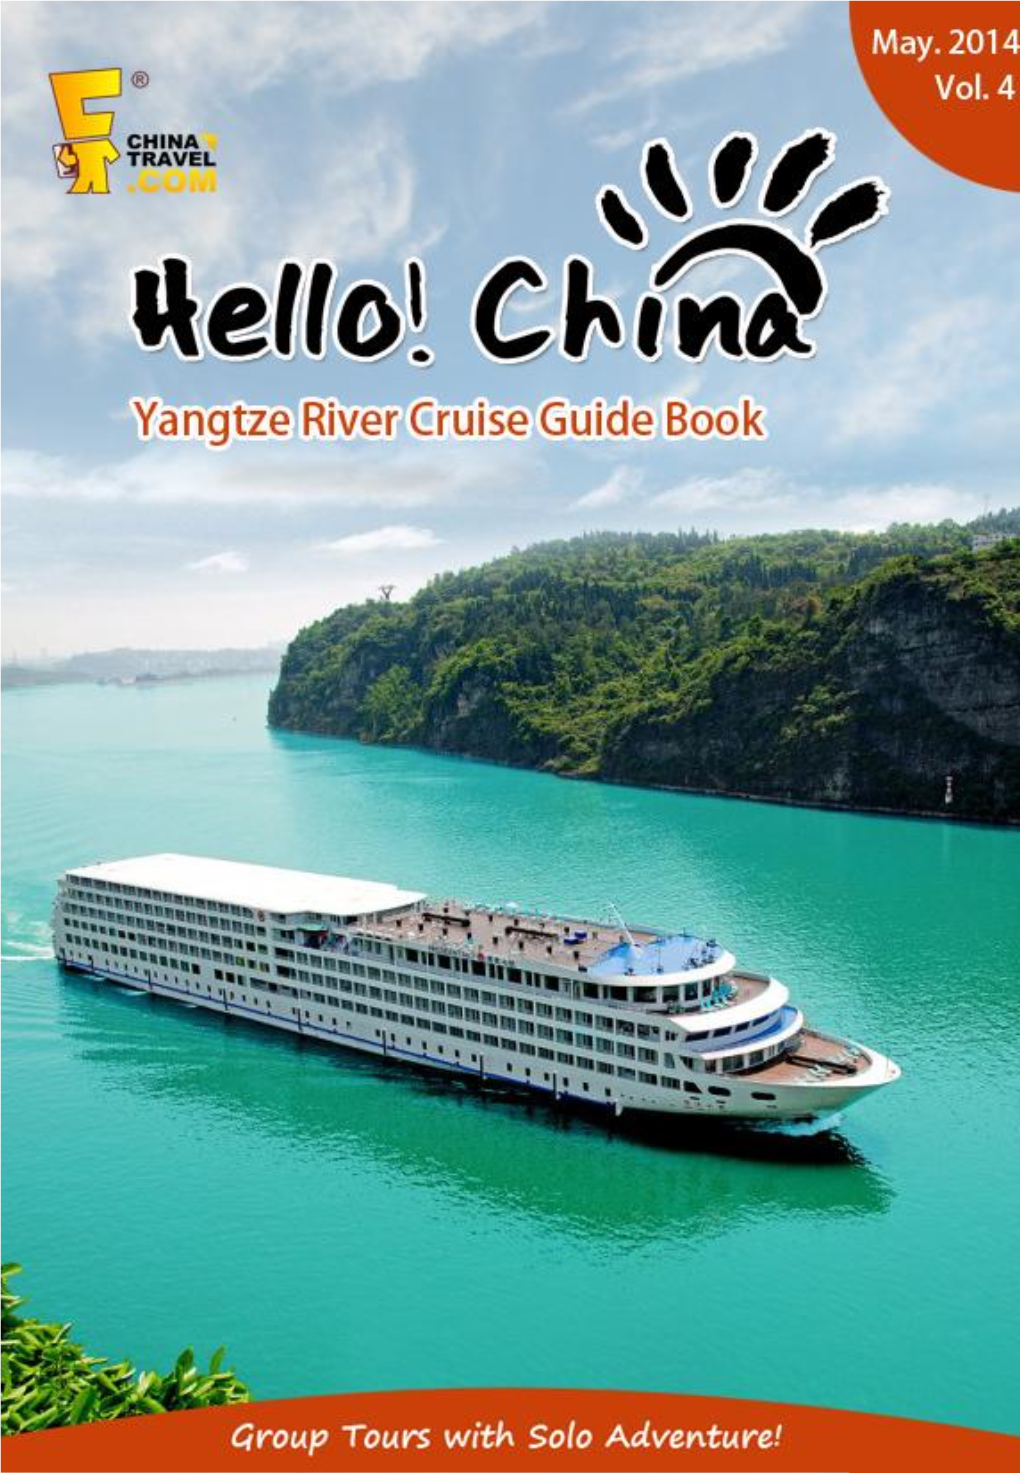 4-Day Yangtze River Cruise on President 7